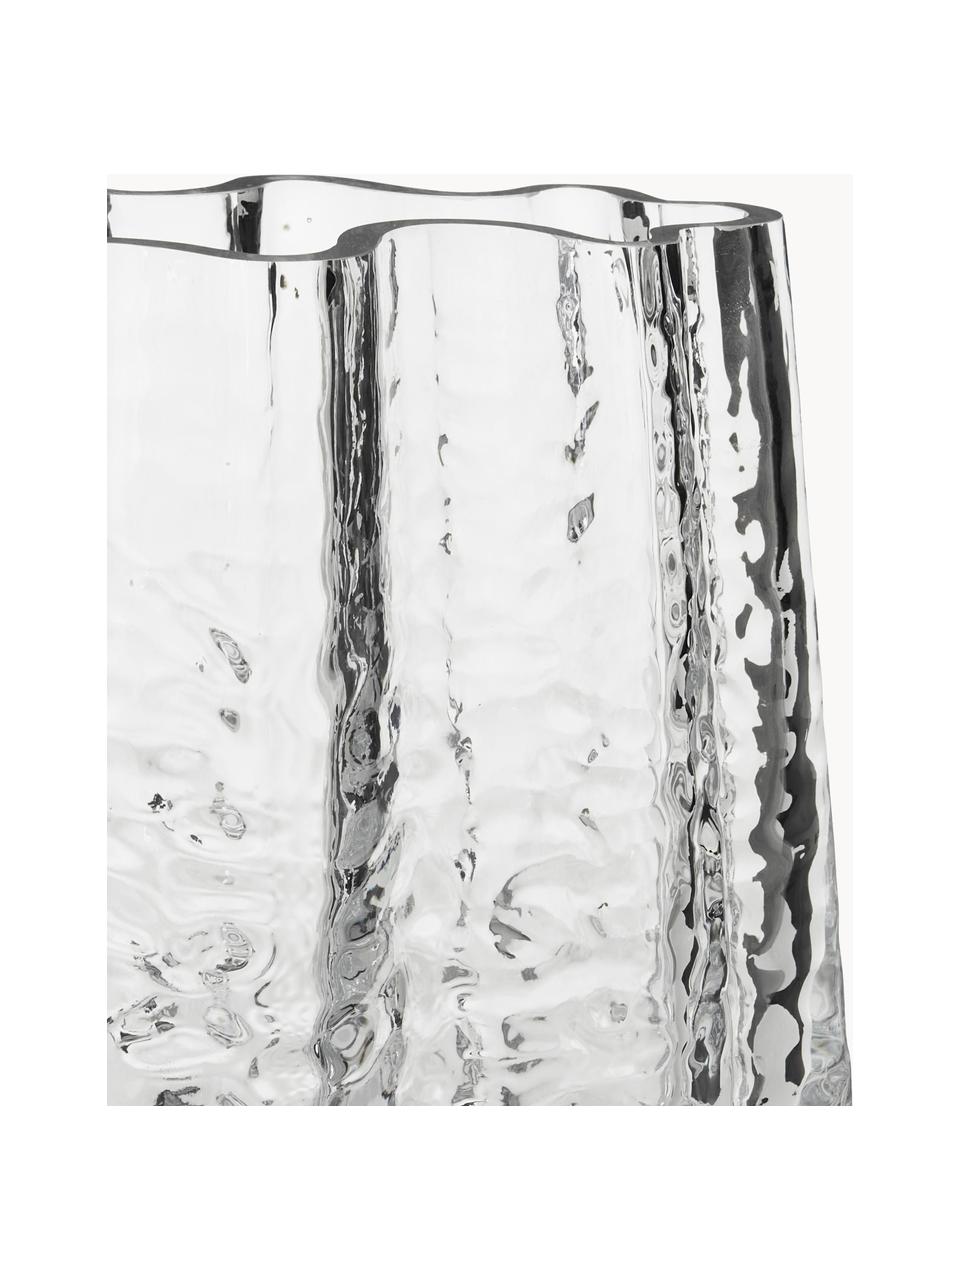 Mundgeblasene Glas-Vase Gry mit strukturierter Oberfläche, H 19 cm, Glas, mundgeblasen, Transparent, B 24 x H 19 cm